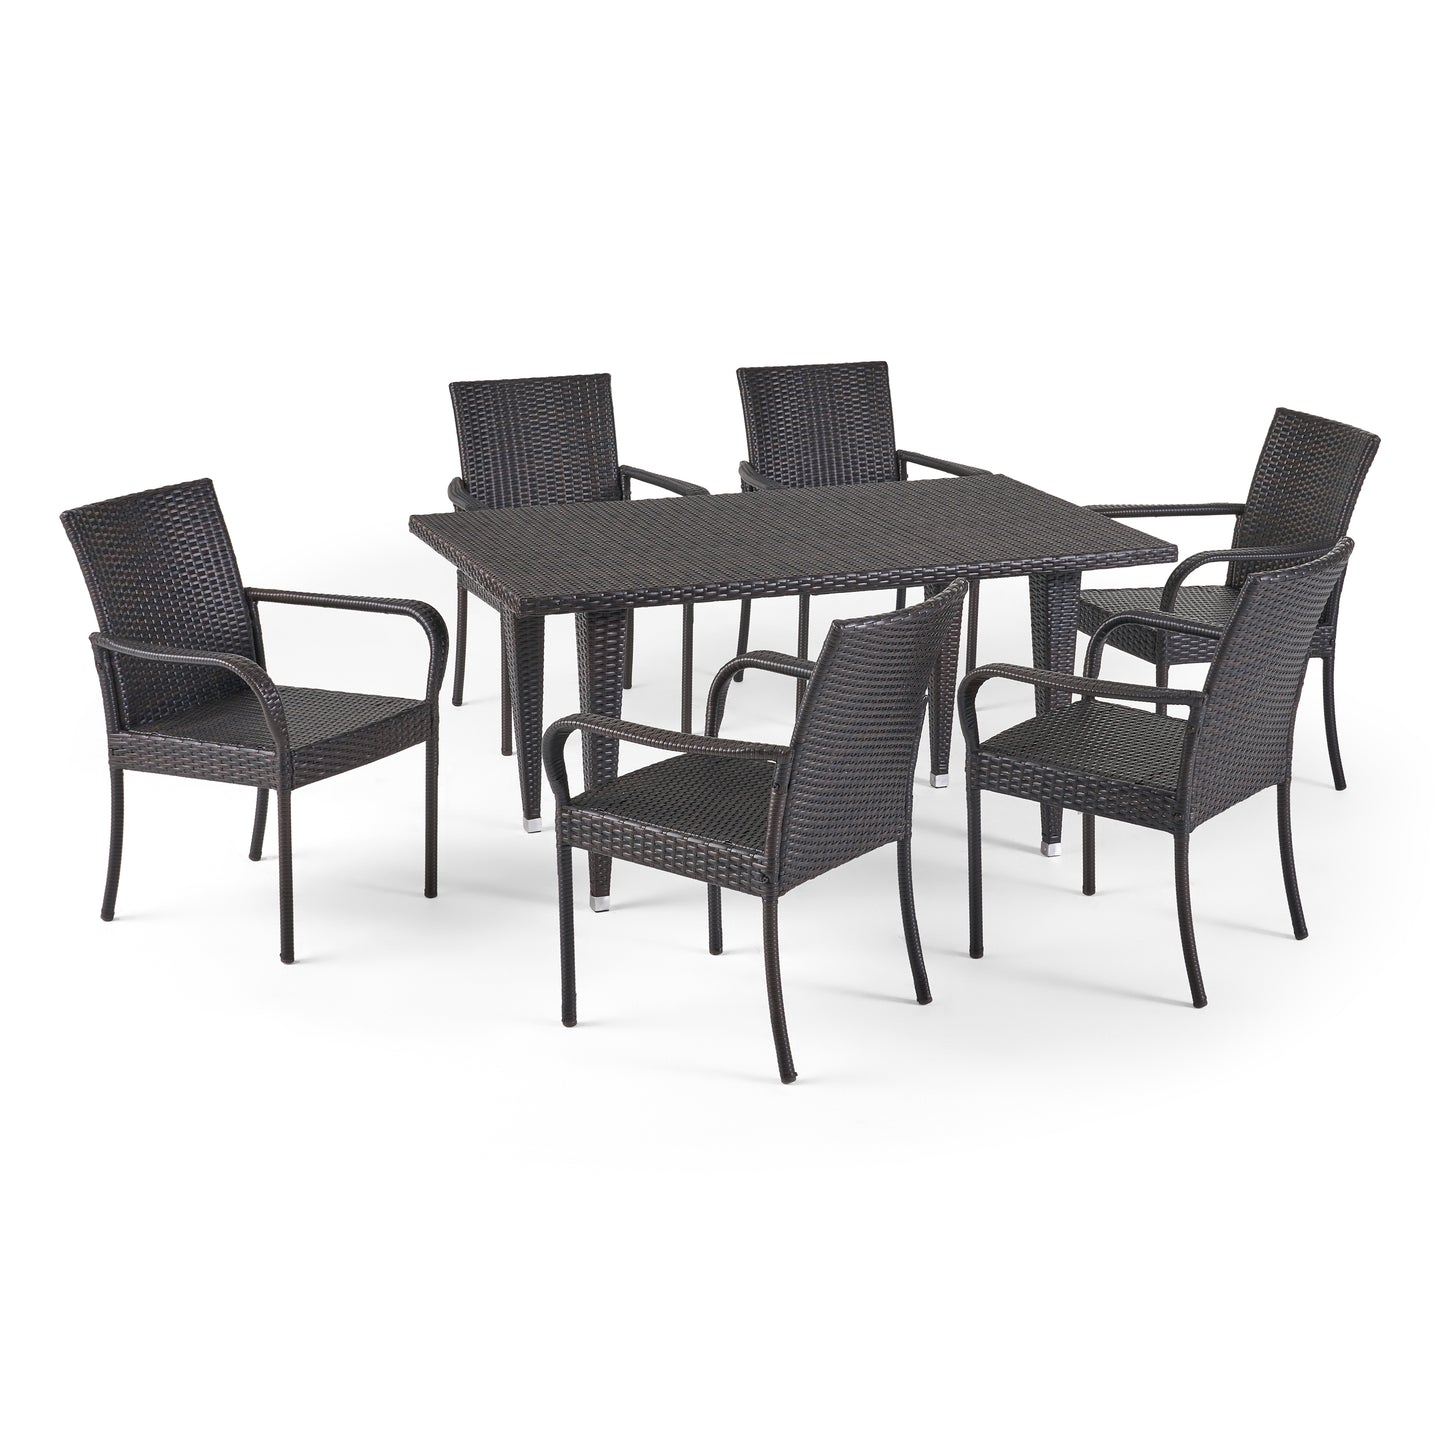 Havik Outdoor Contemporary 6 Seater Wicker Dining Set